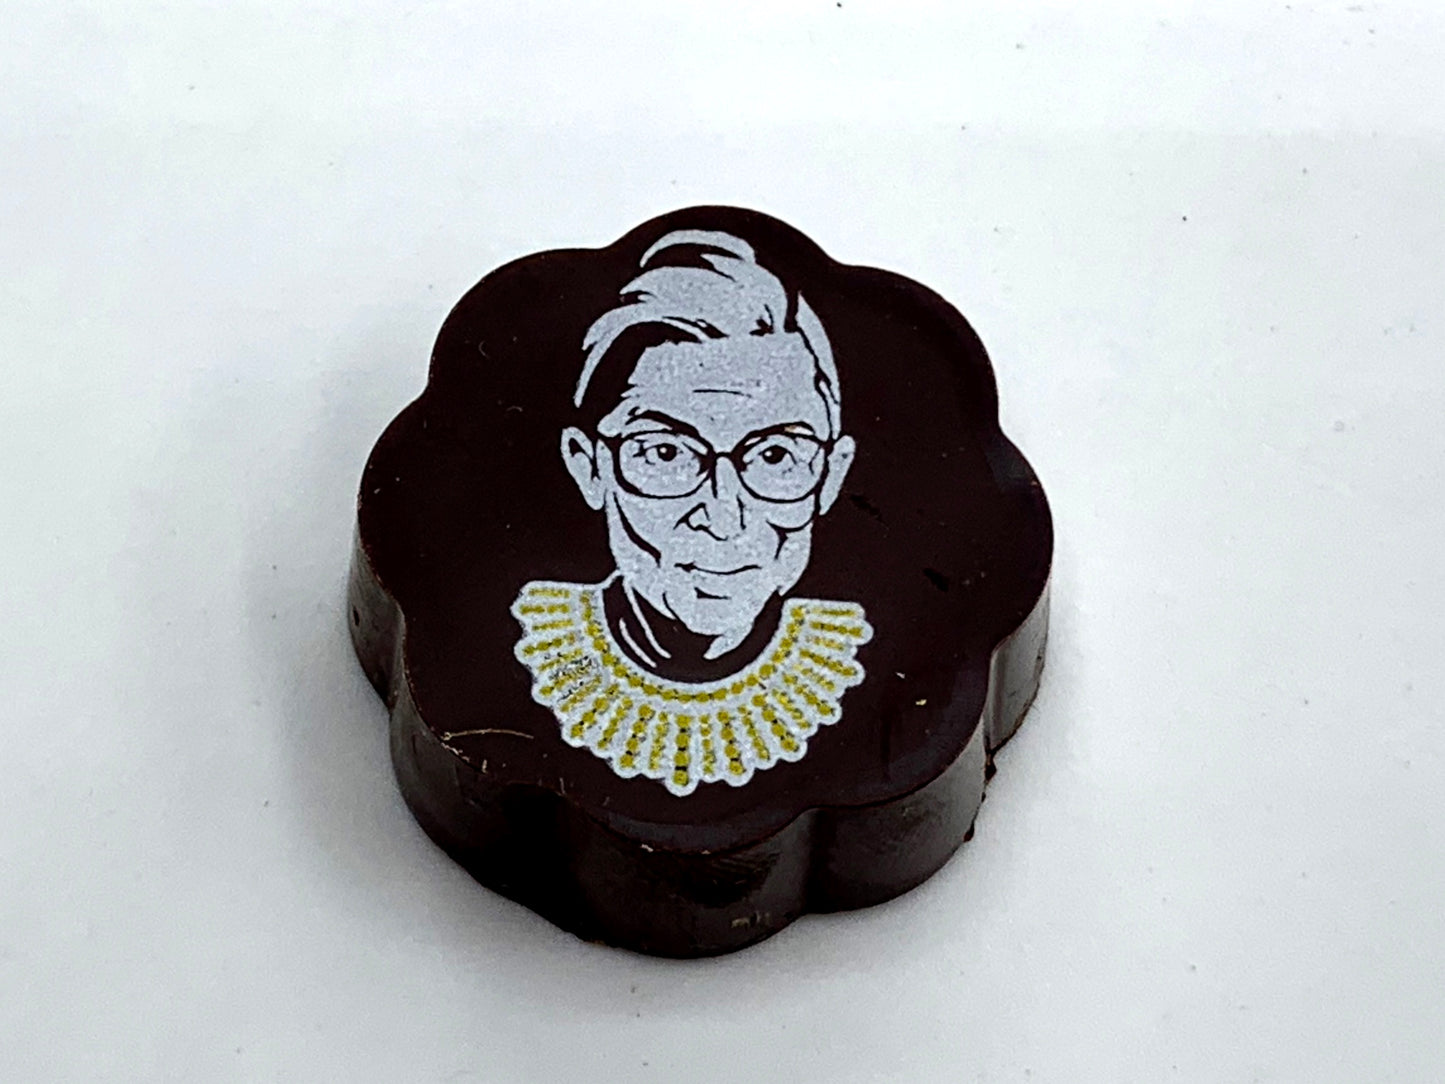 RBG - Ruth Bader Ginsburg Chocolate